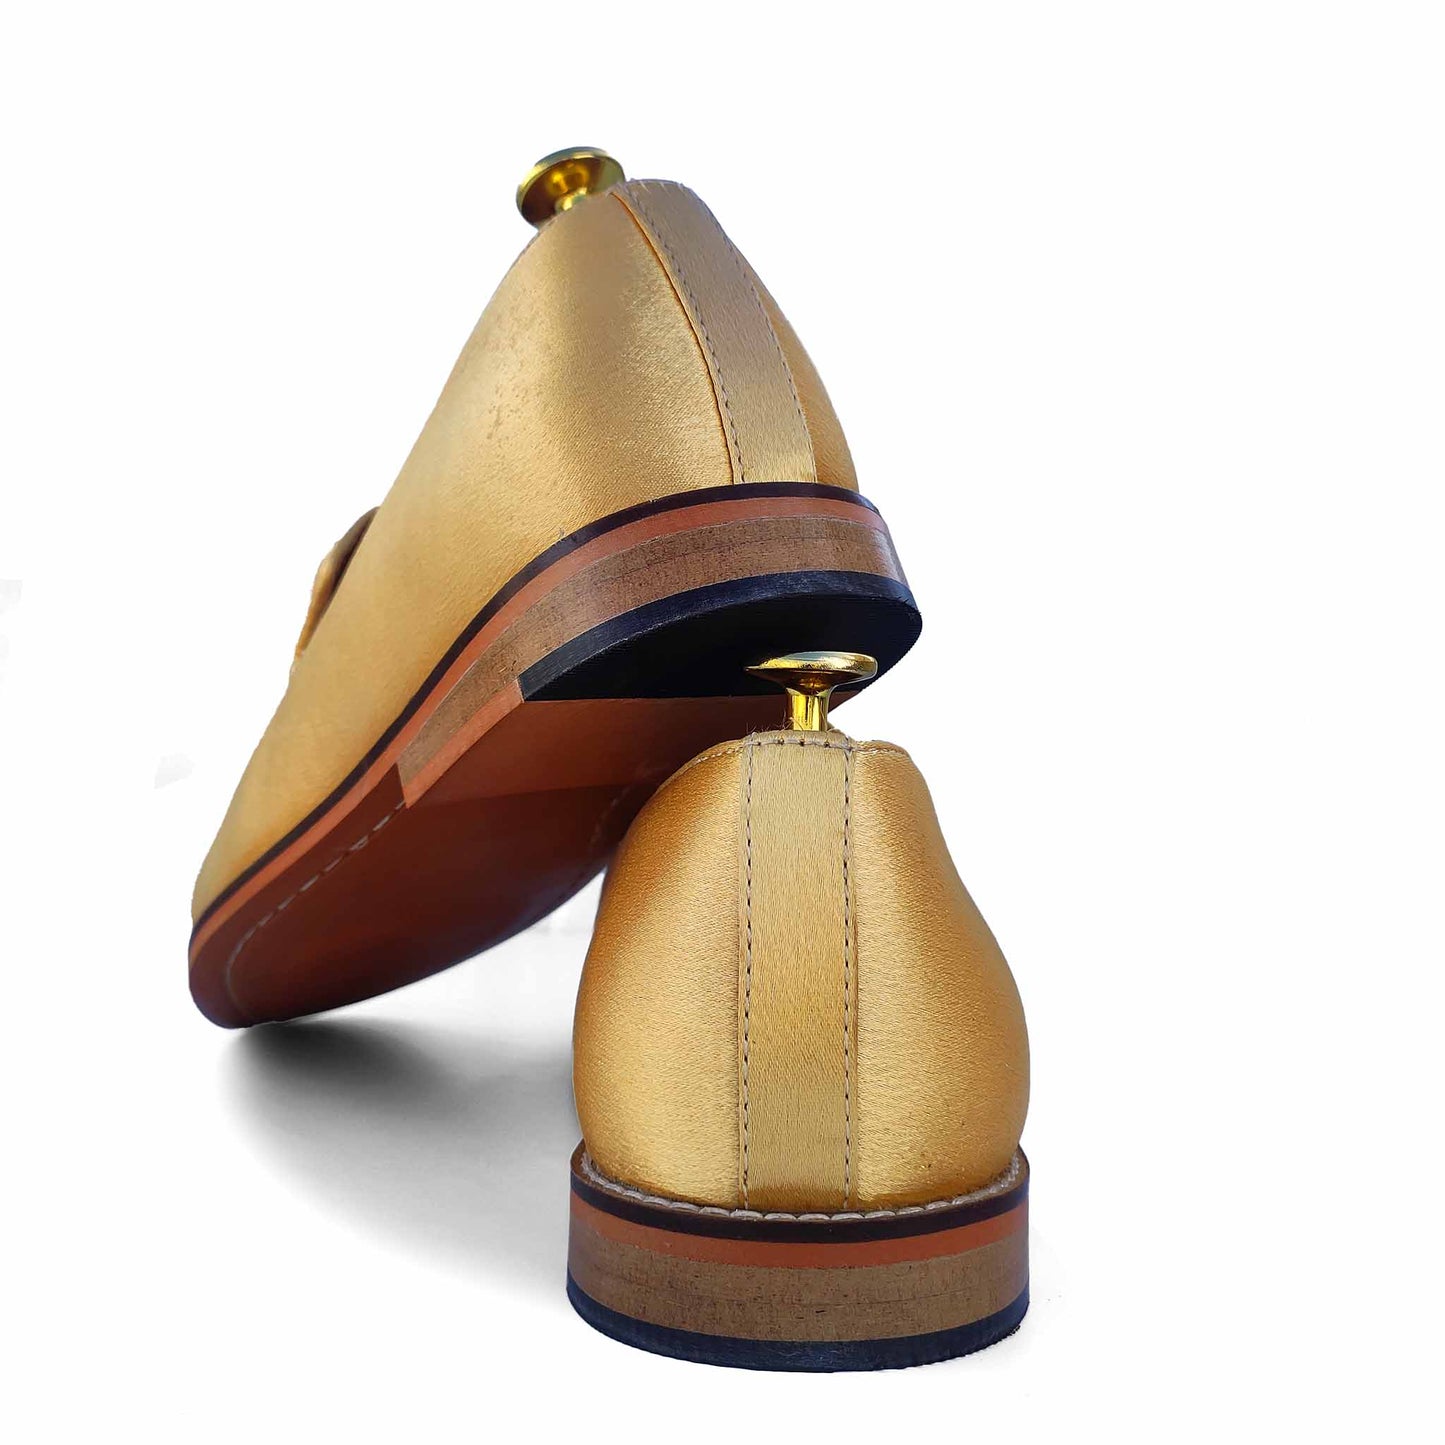 Gold Satin Silk with Golden Zardozi Handwork for Men